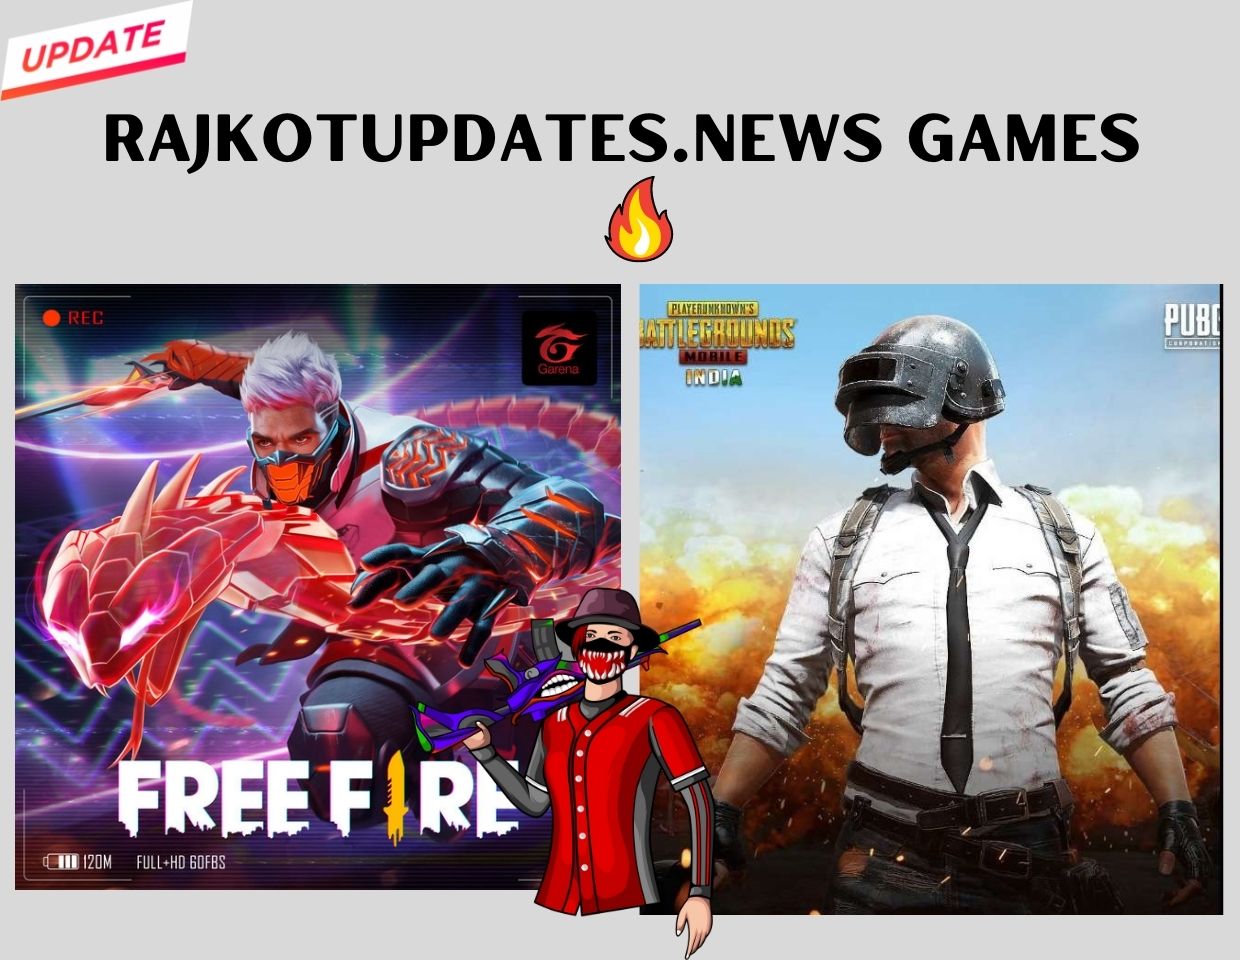 Rajkotupdates.news games